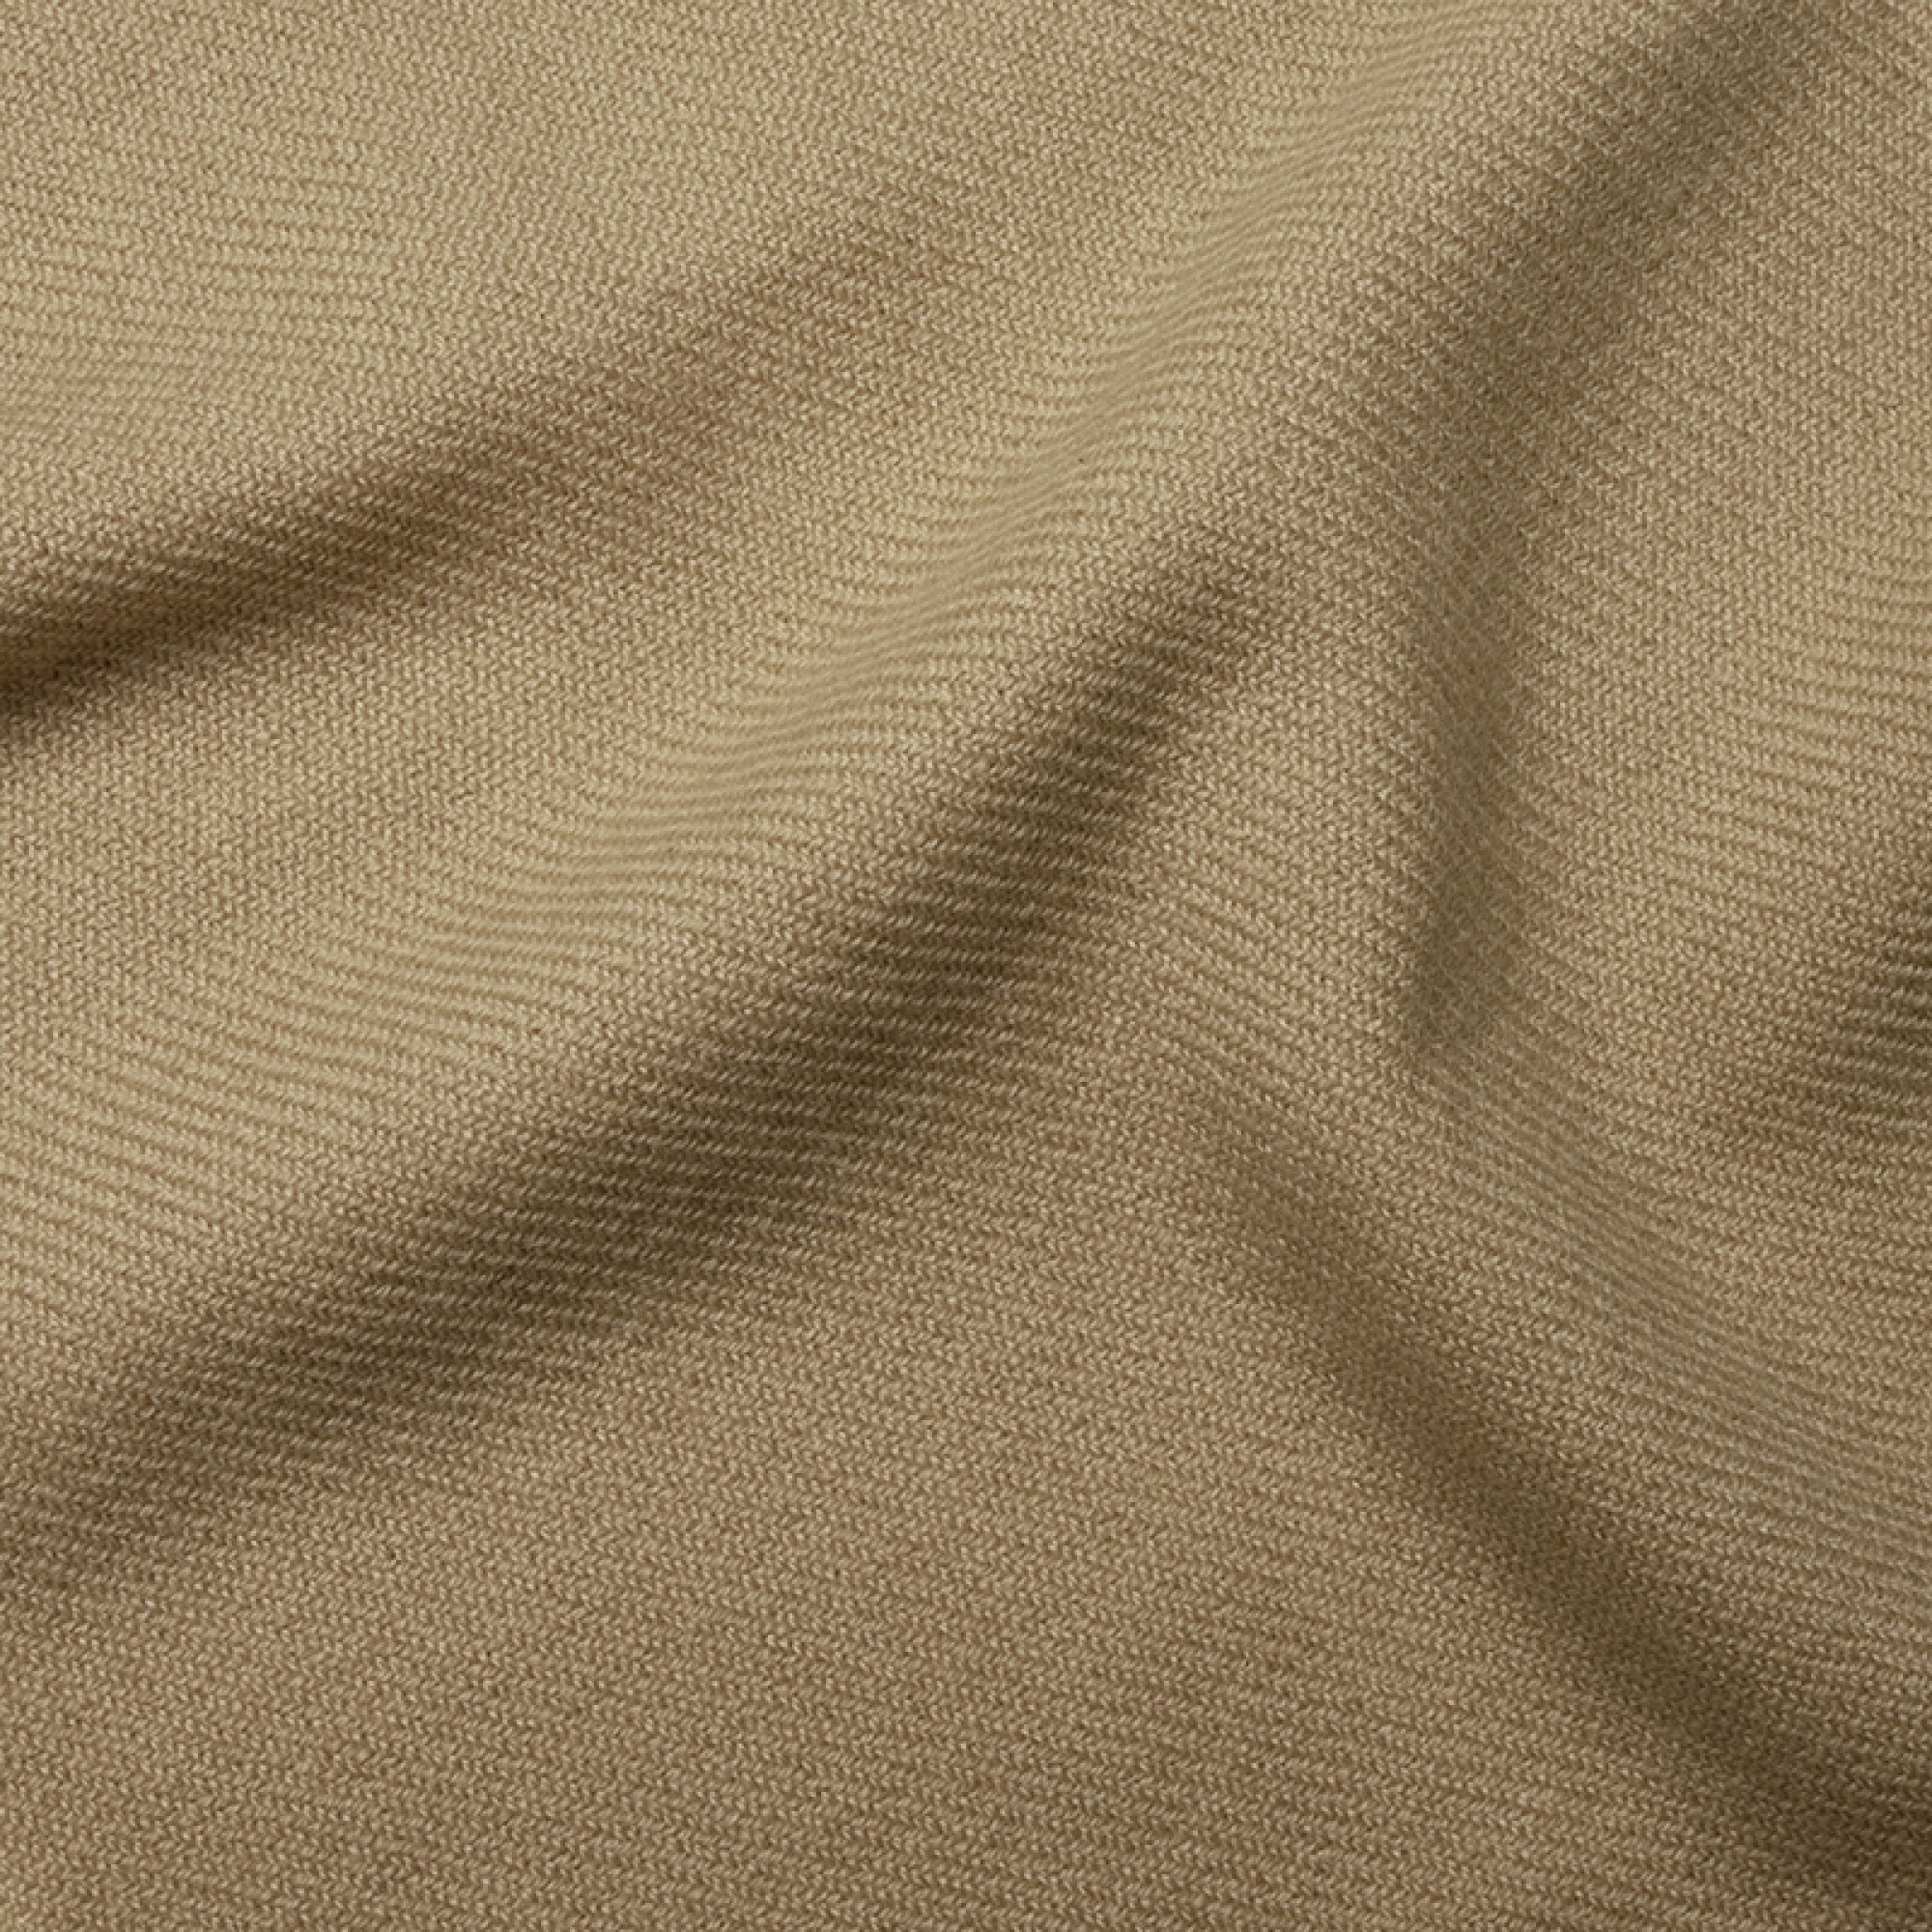 Cachemire pull femme toodoo plain s 140 x 200 beige 140 x 200 cm